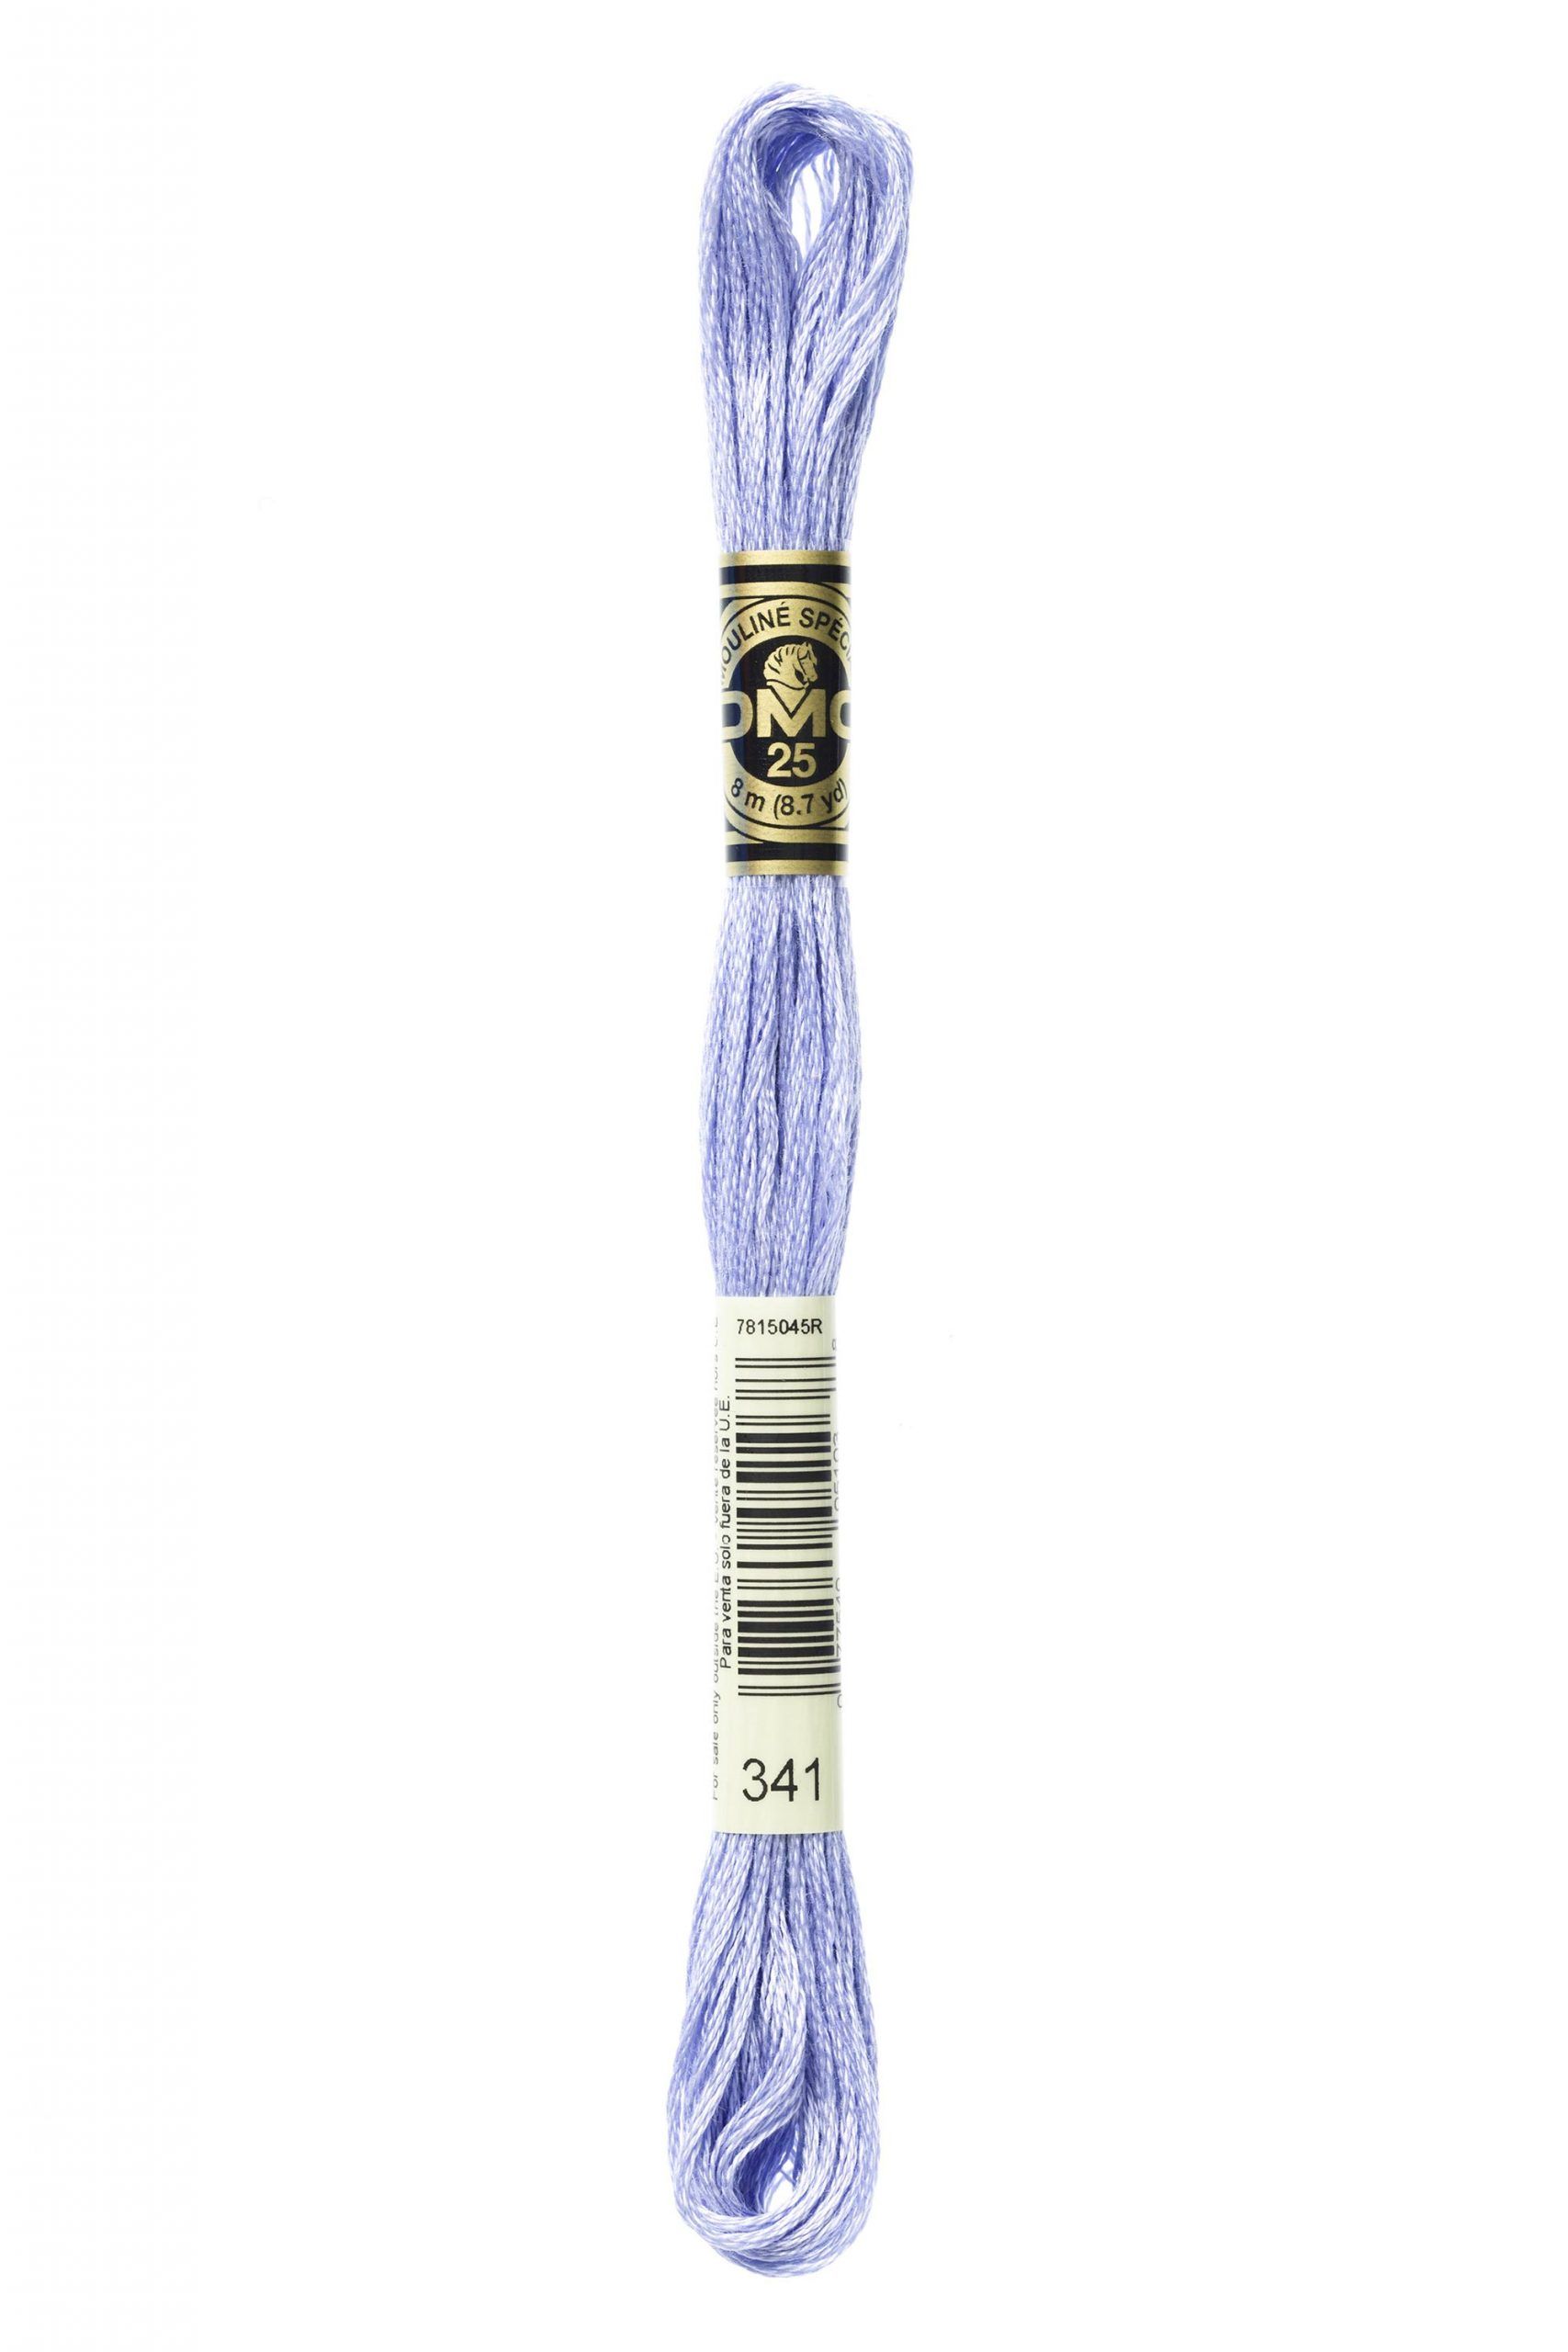 341 - Violeta azulado claro